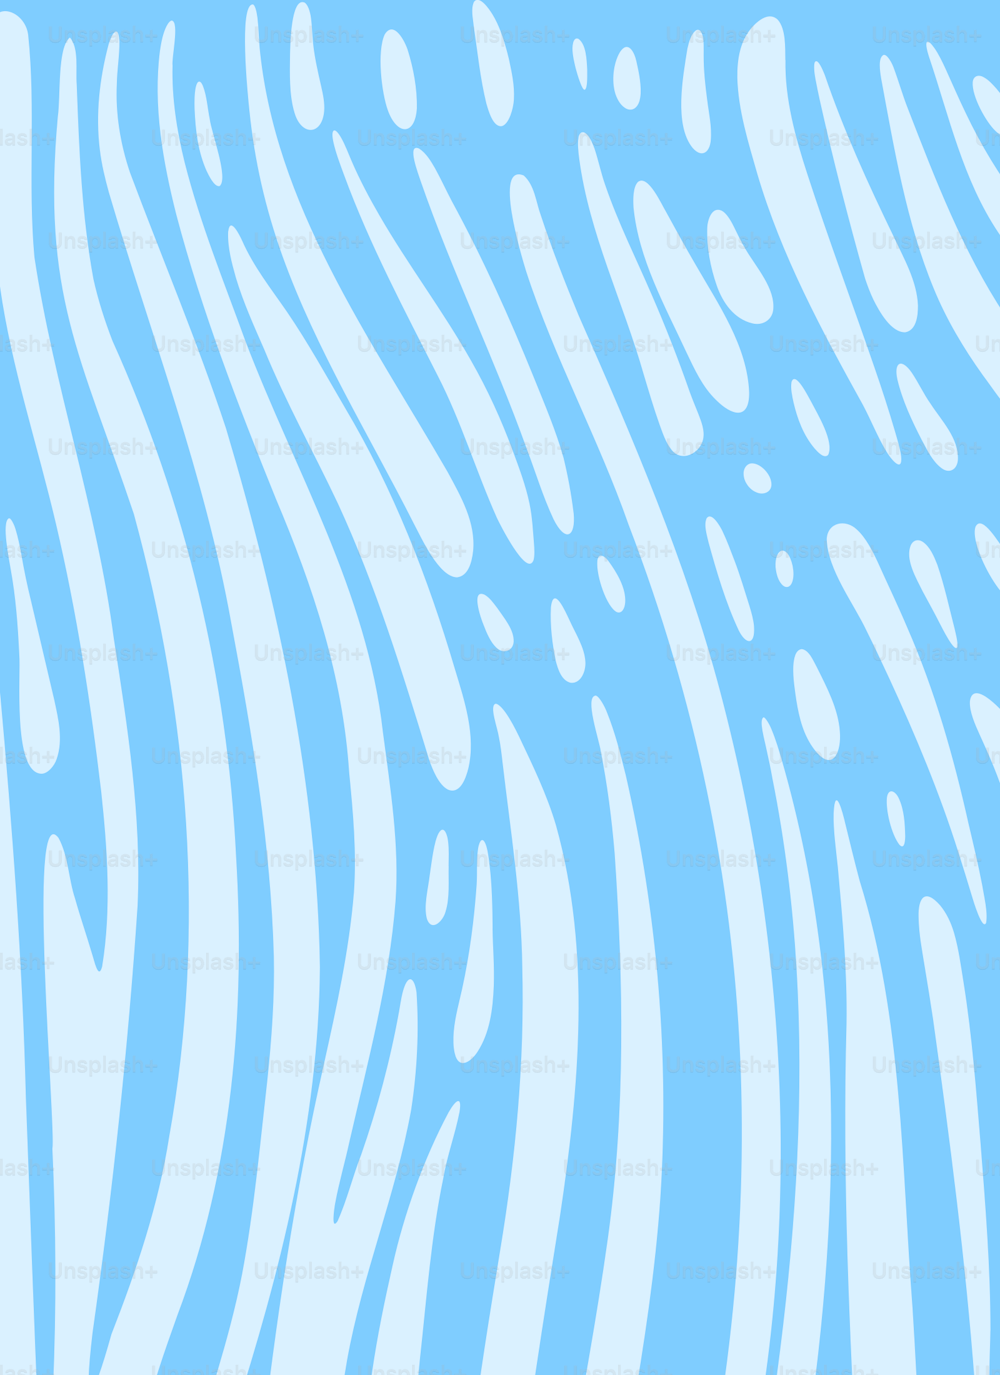 uno sfondo blu e bianco con linee ondulate